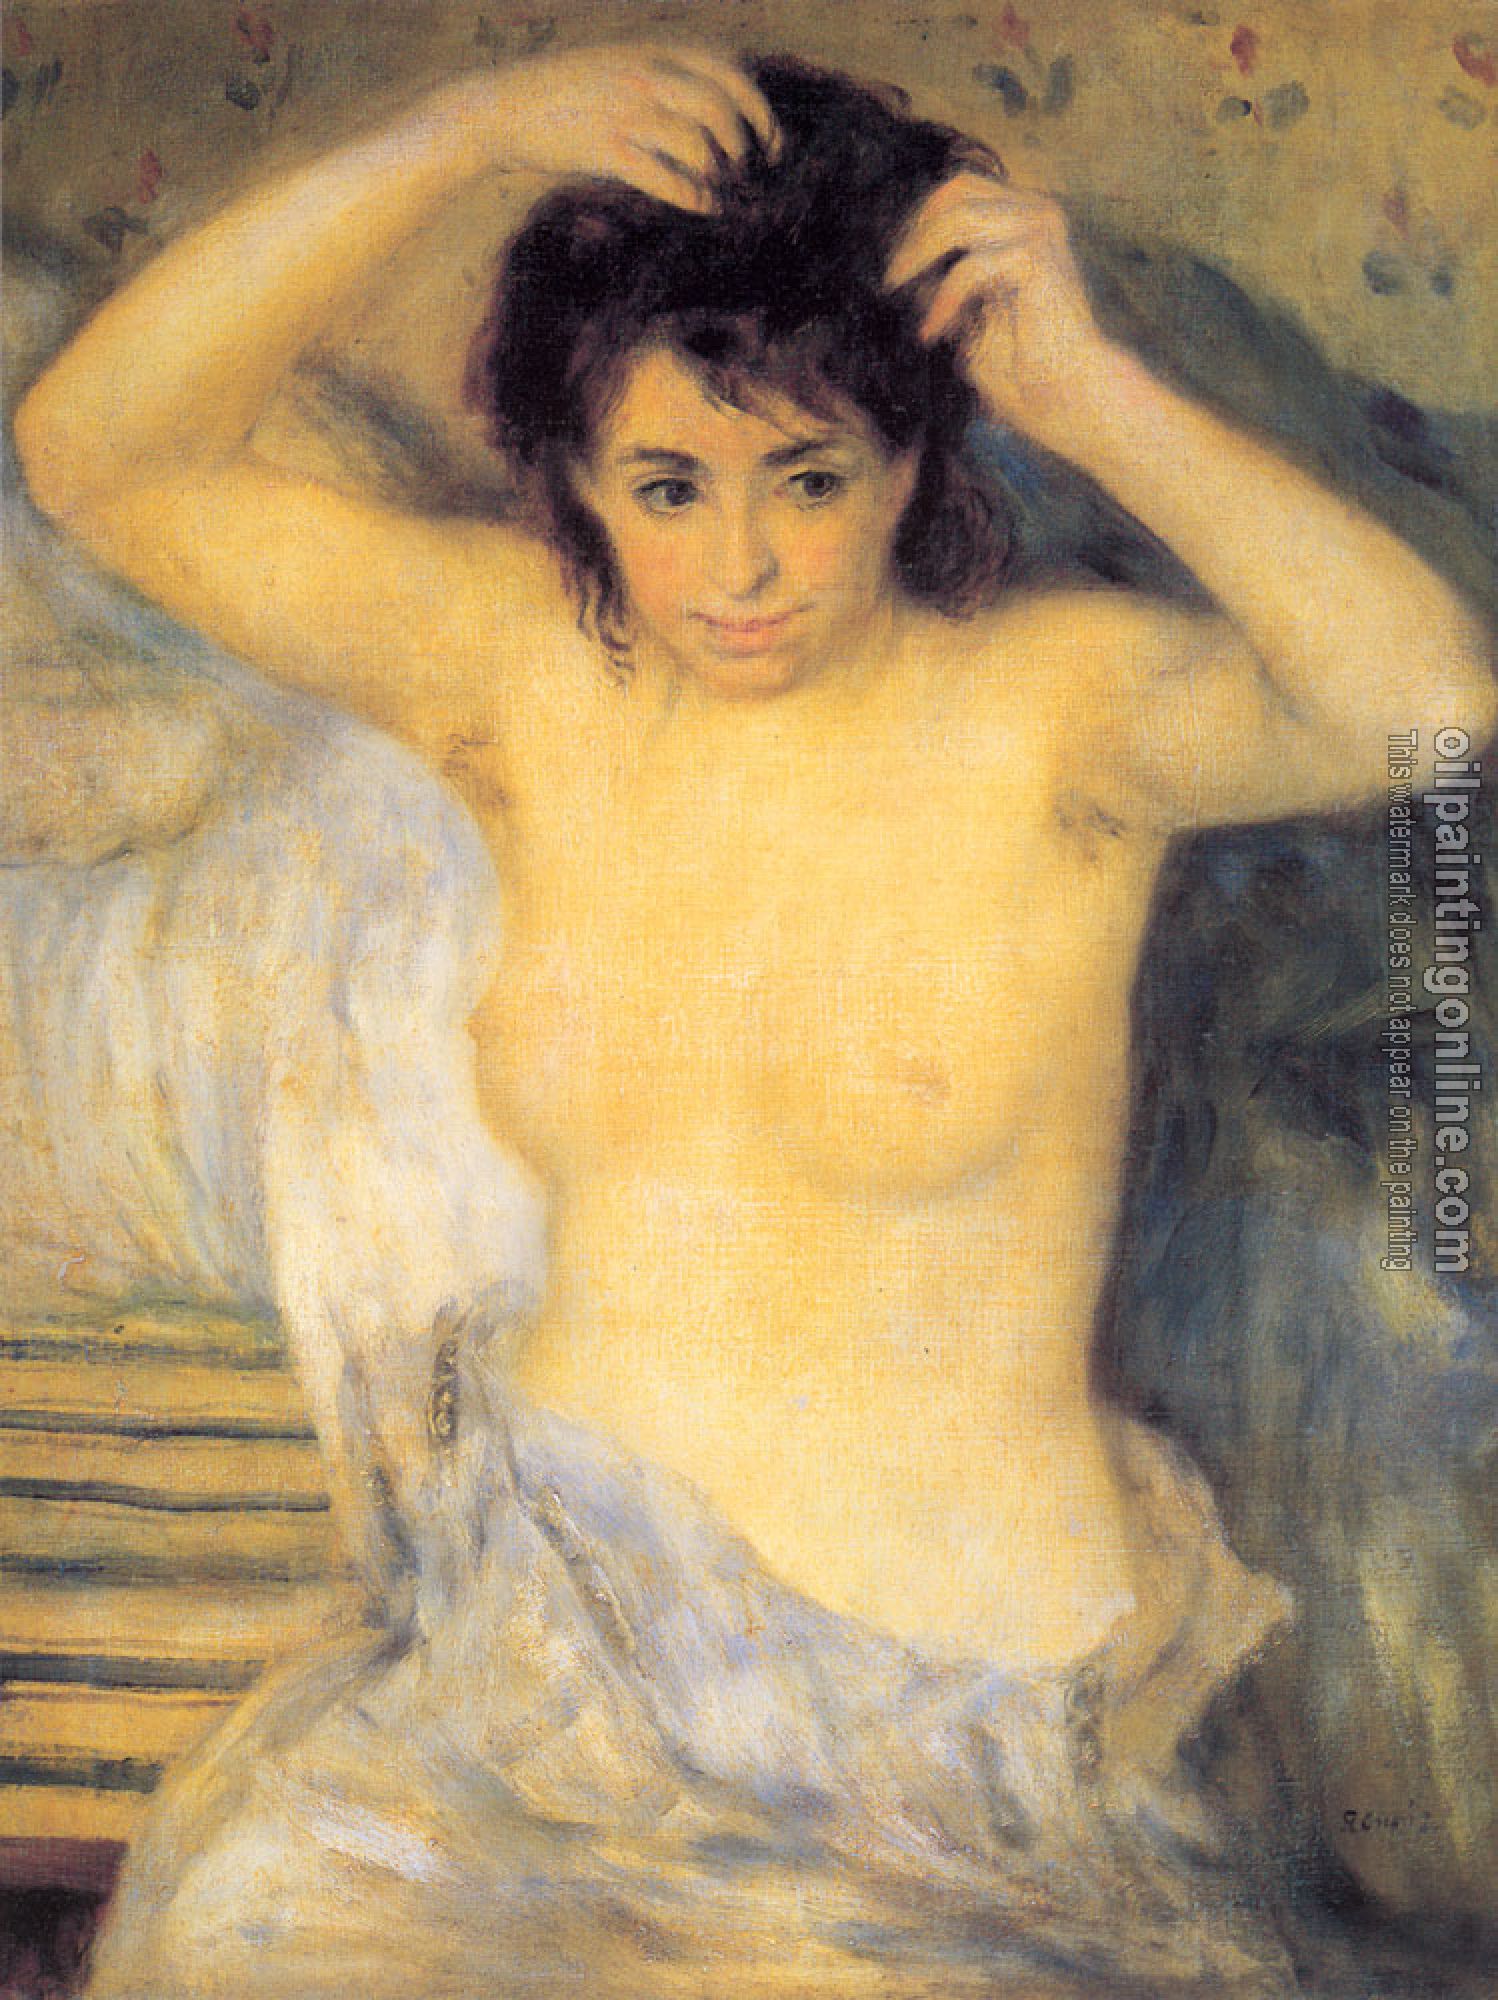 Renoir, Pierre Auguste - Torso: Before the Bath( The Toilette)